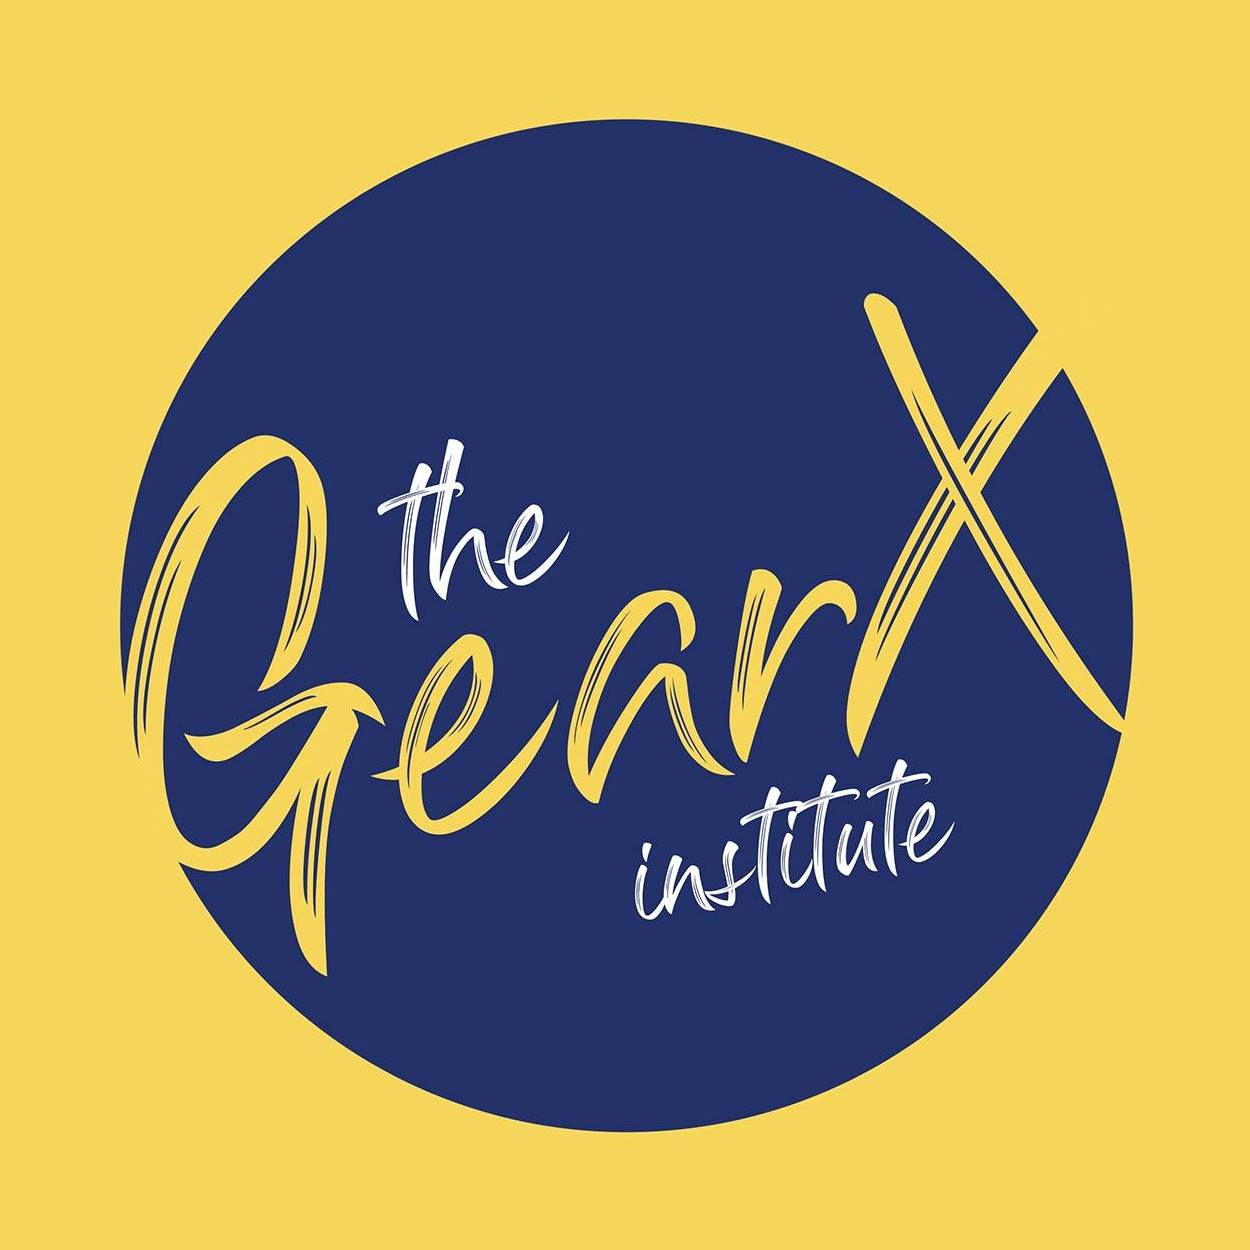 The GearX Institute Logo